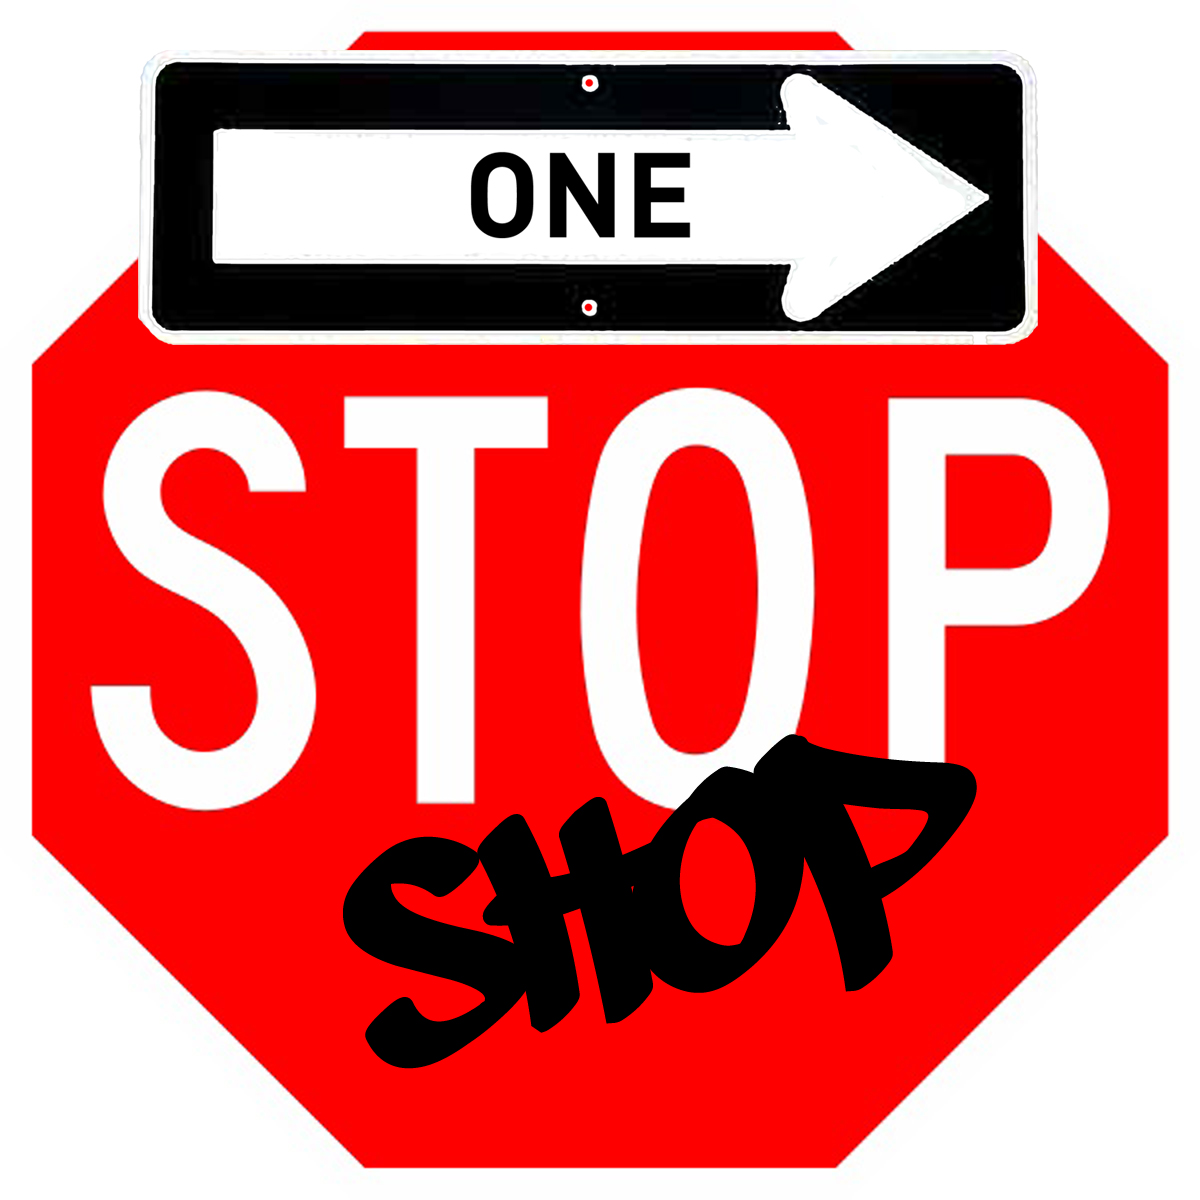 Stop & Shop - Brand